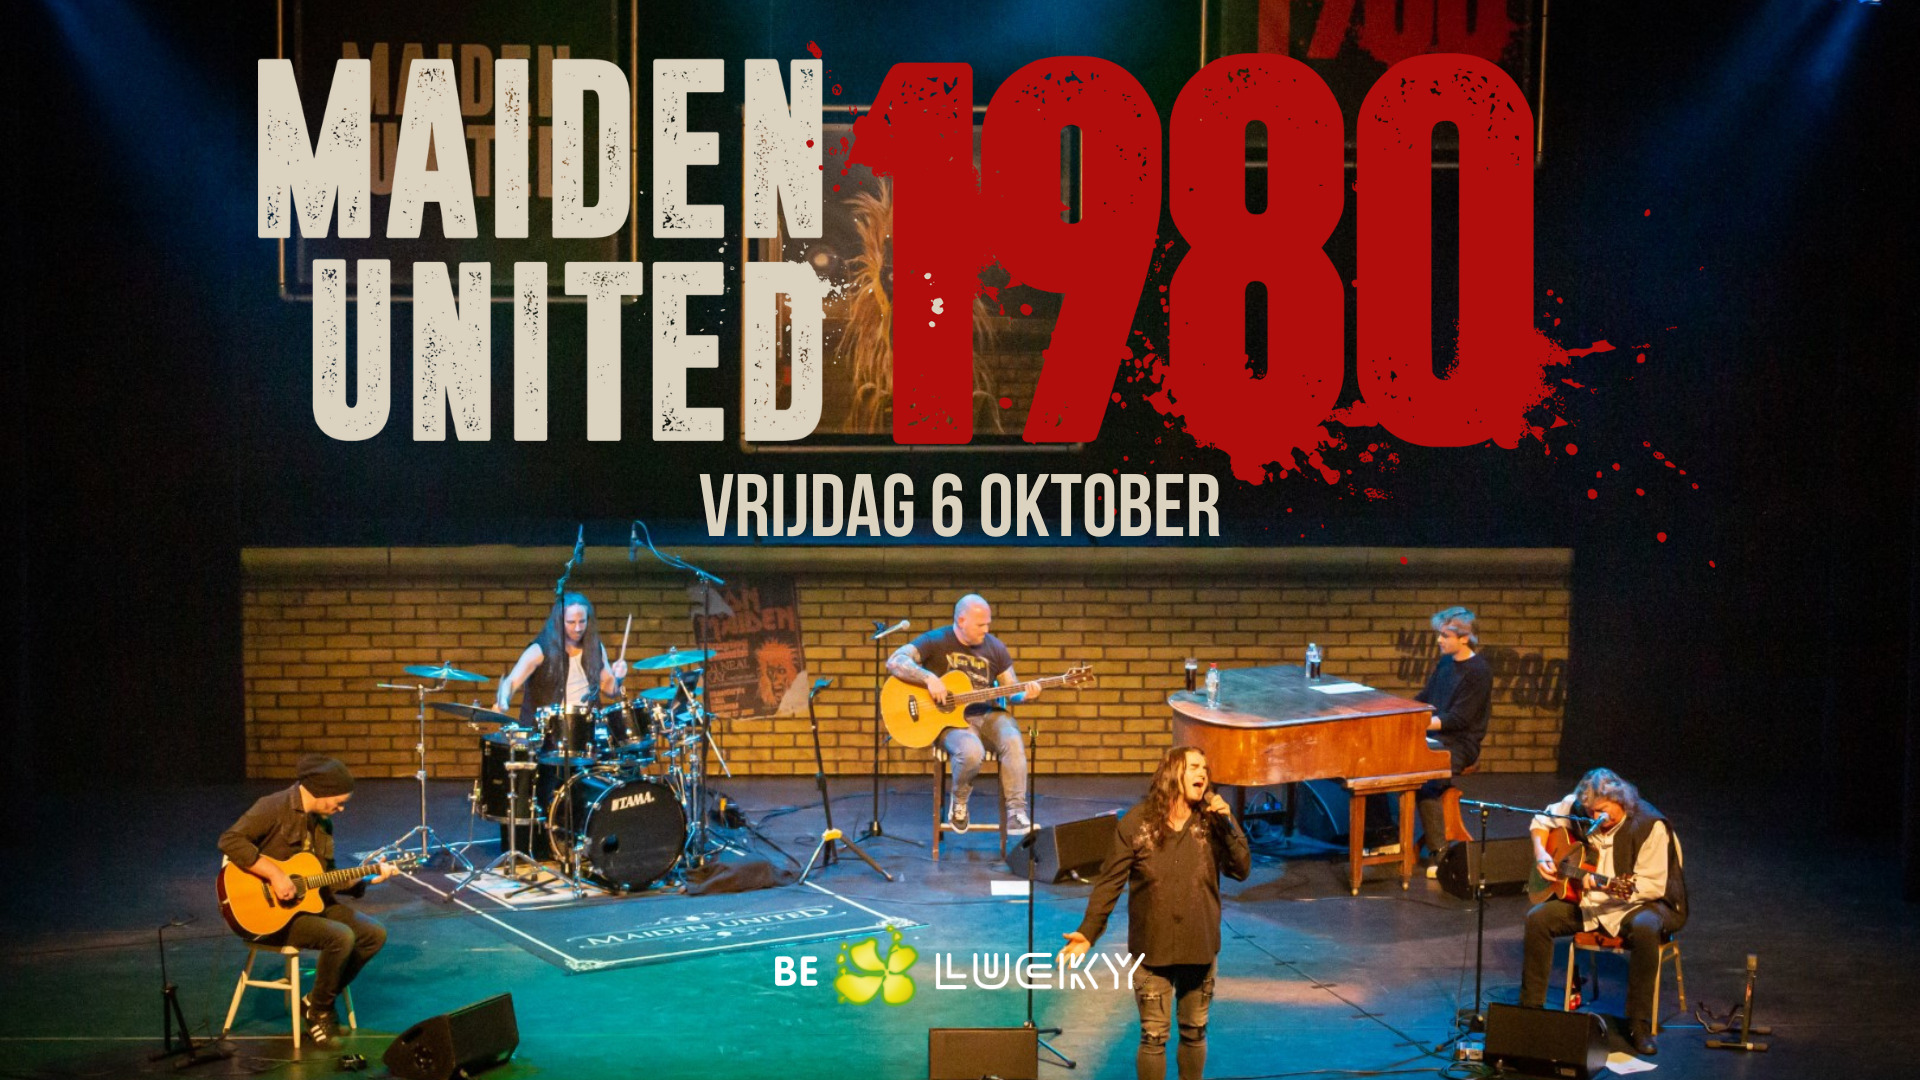 maiden united 1980 lucky rijssen aankondiging